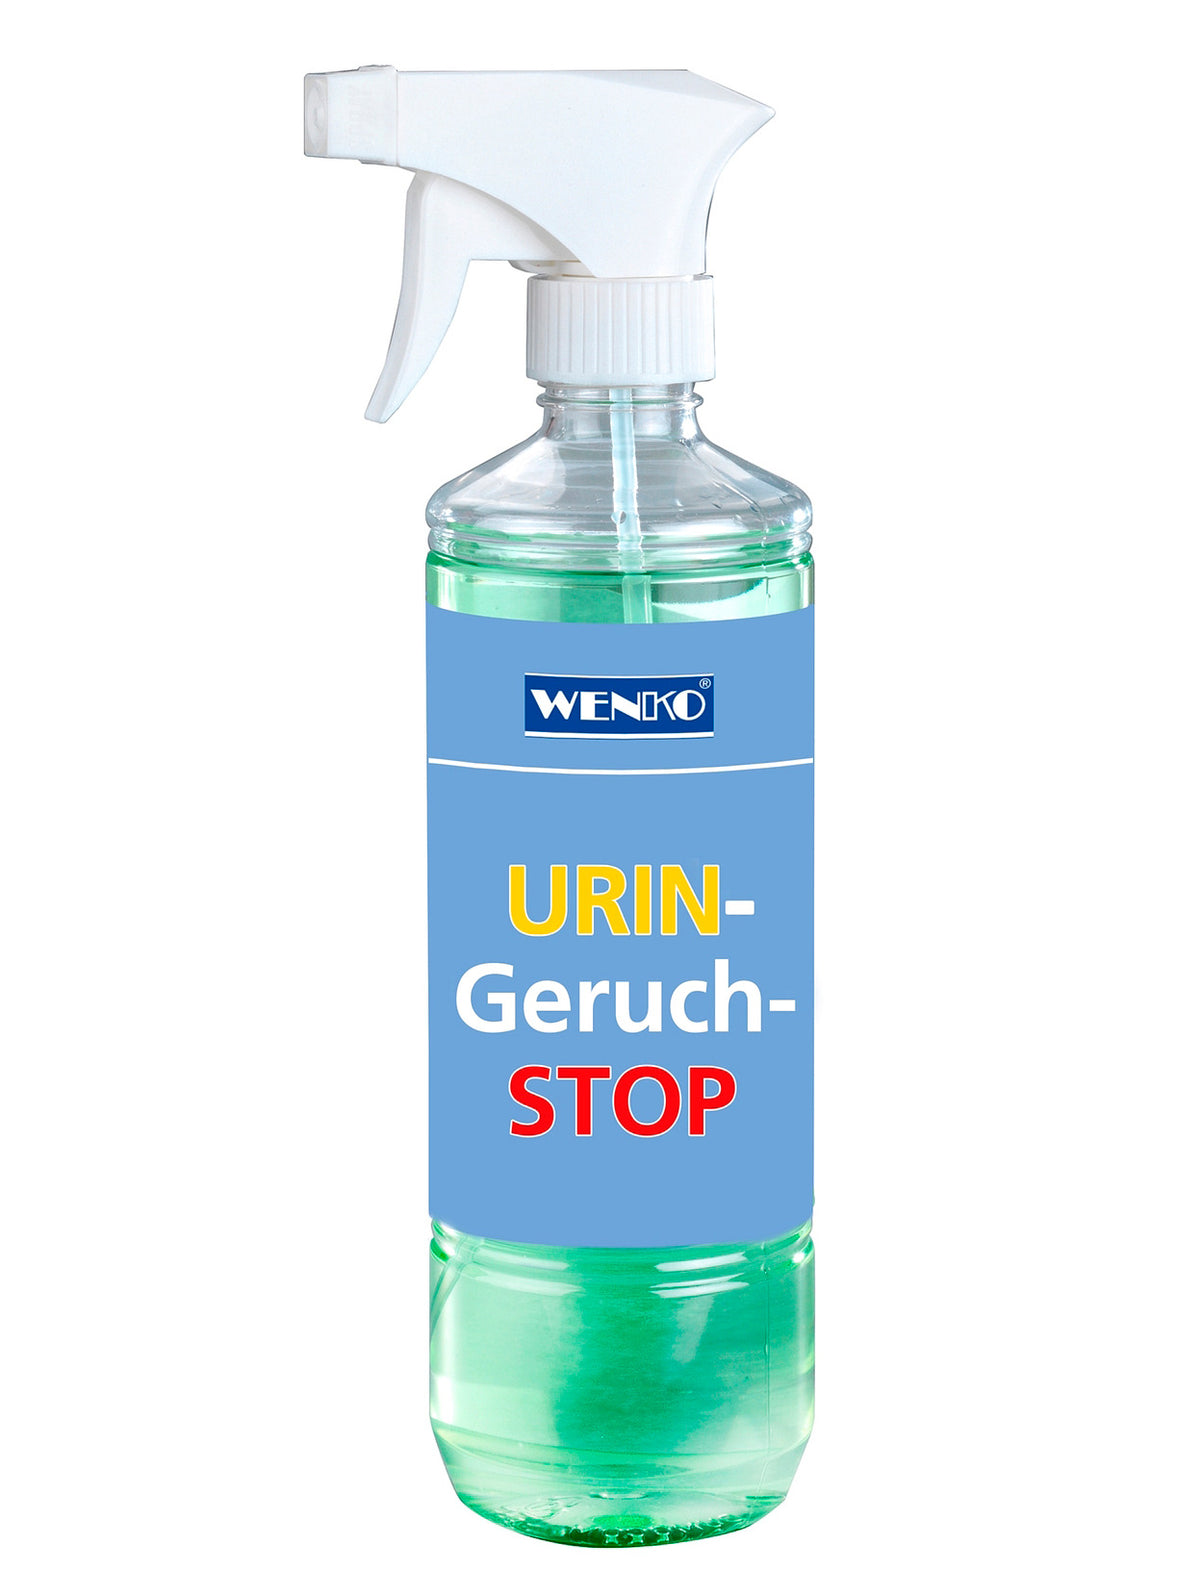 Urin-Geruch-Stop